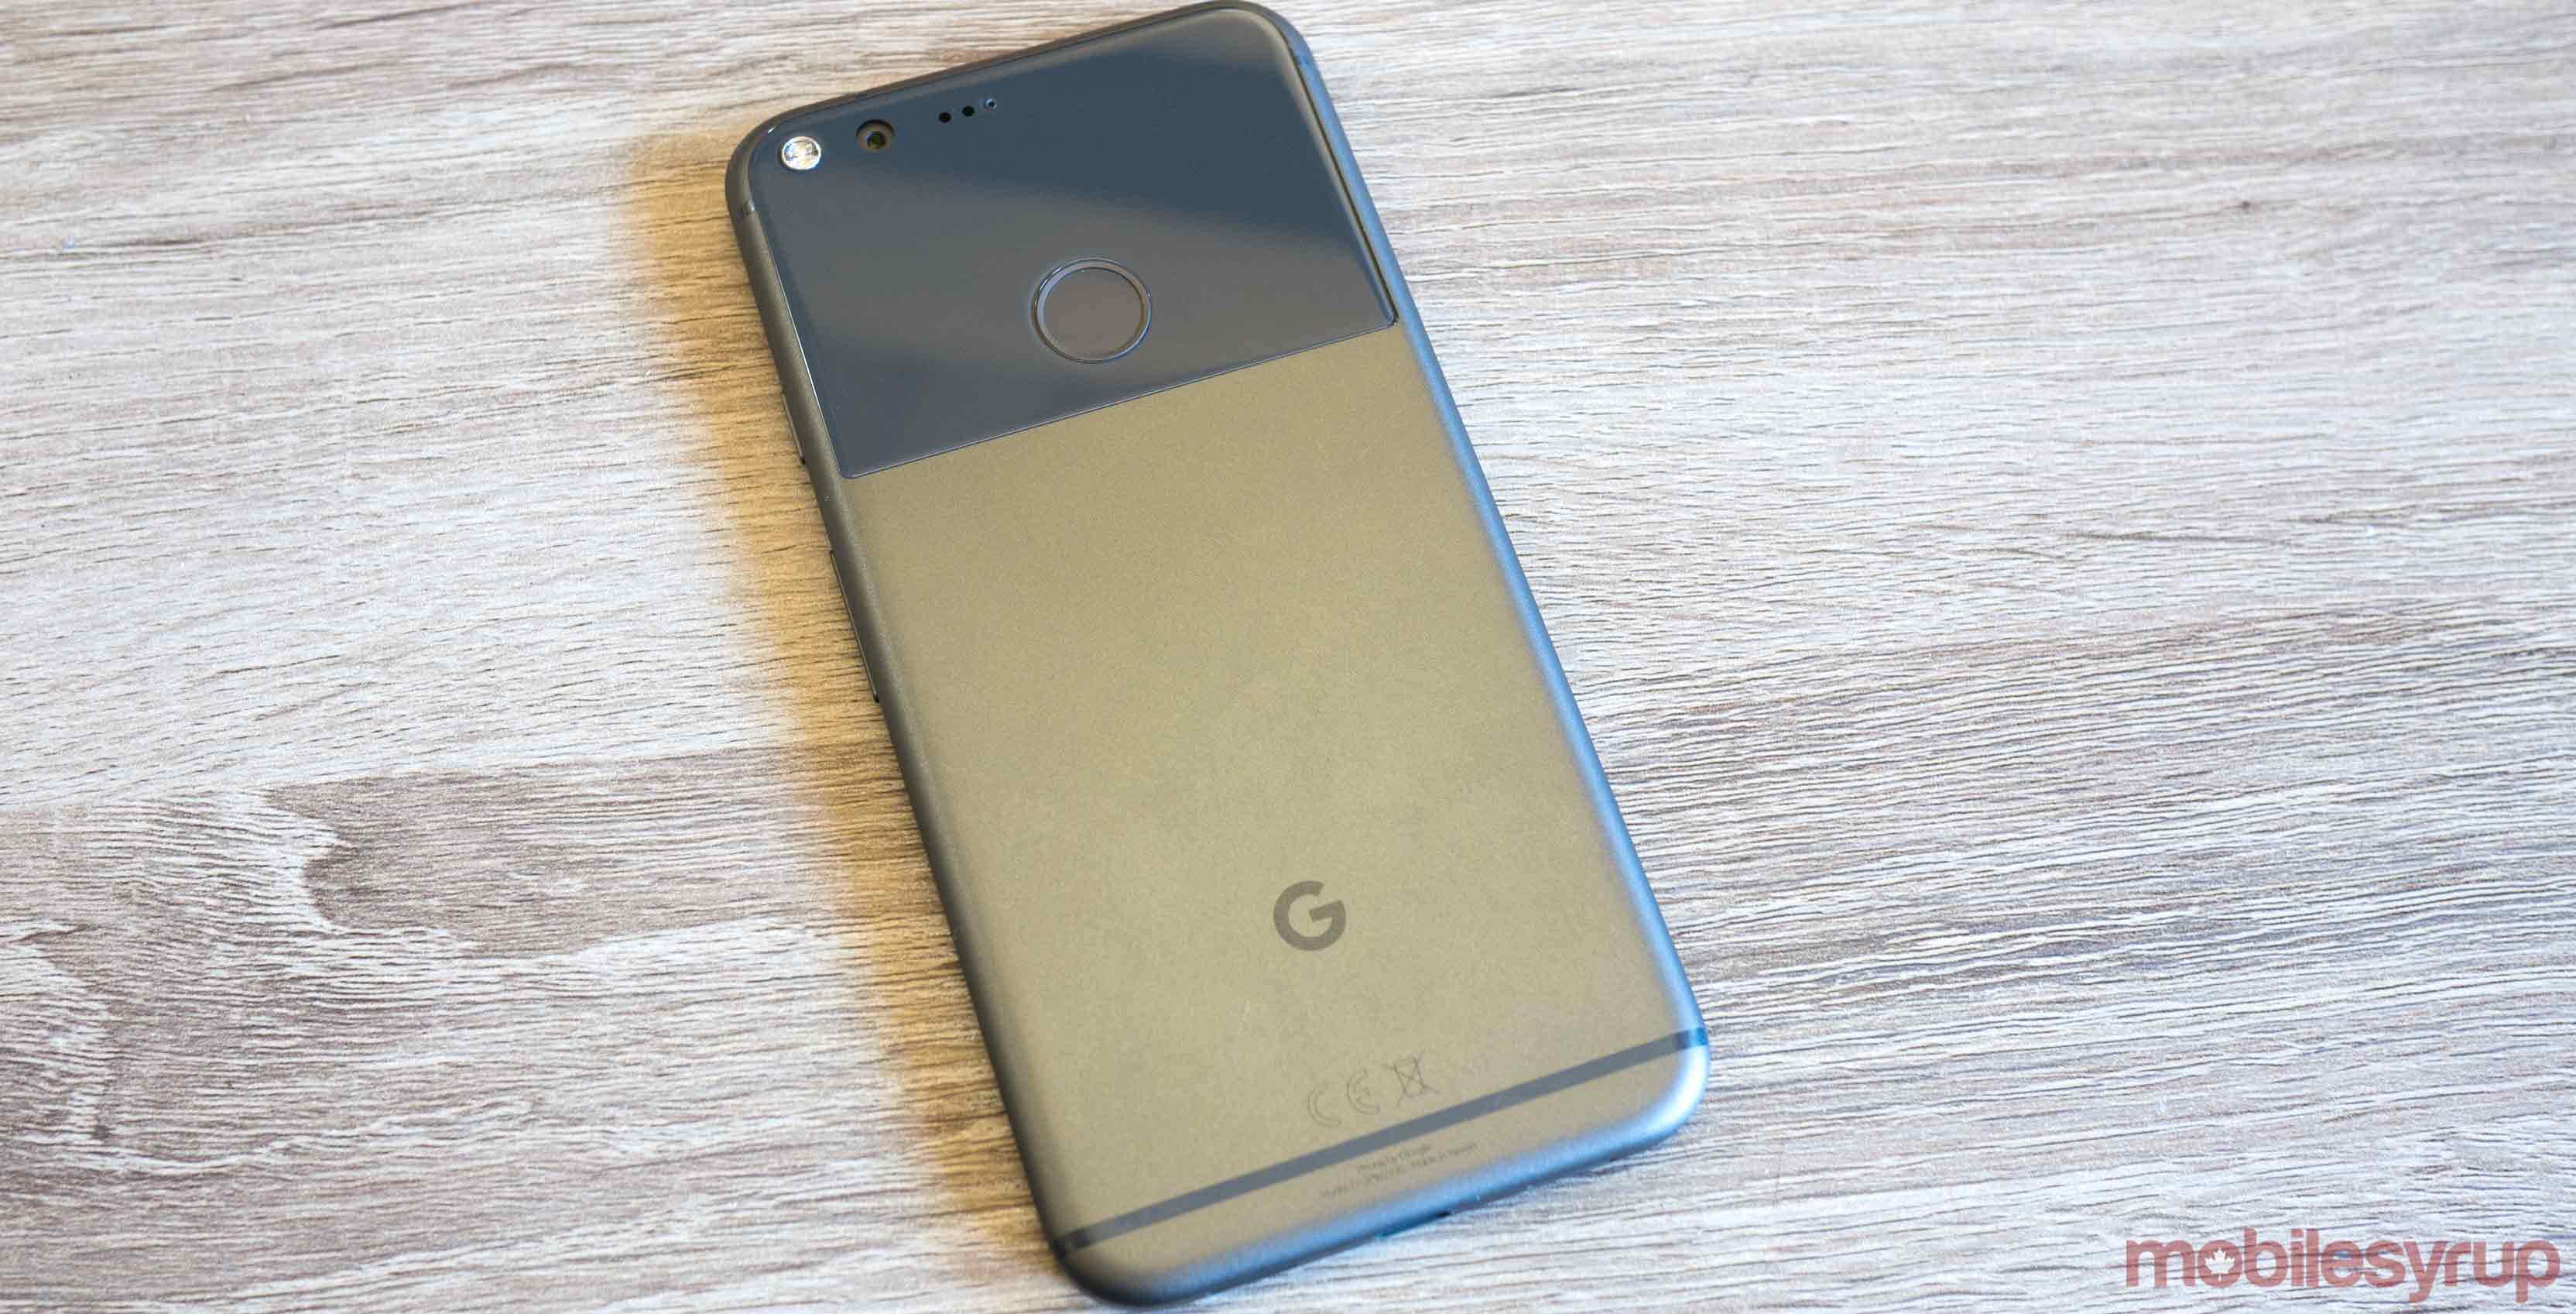 Google's Pixel smartphone now has VoLTE on Rogers